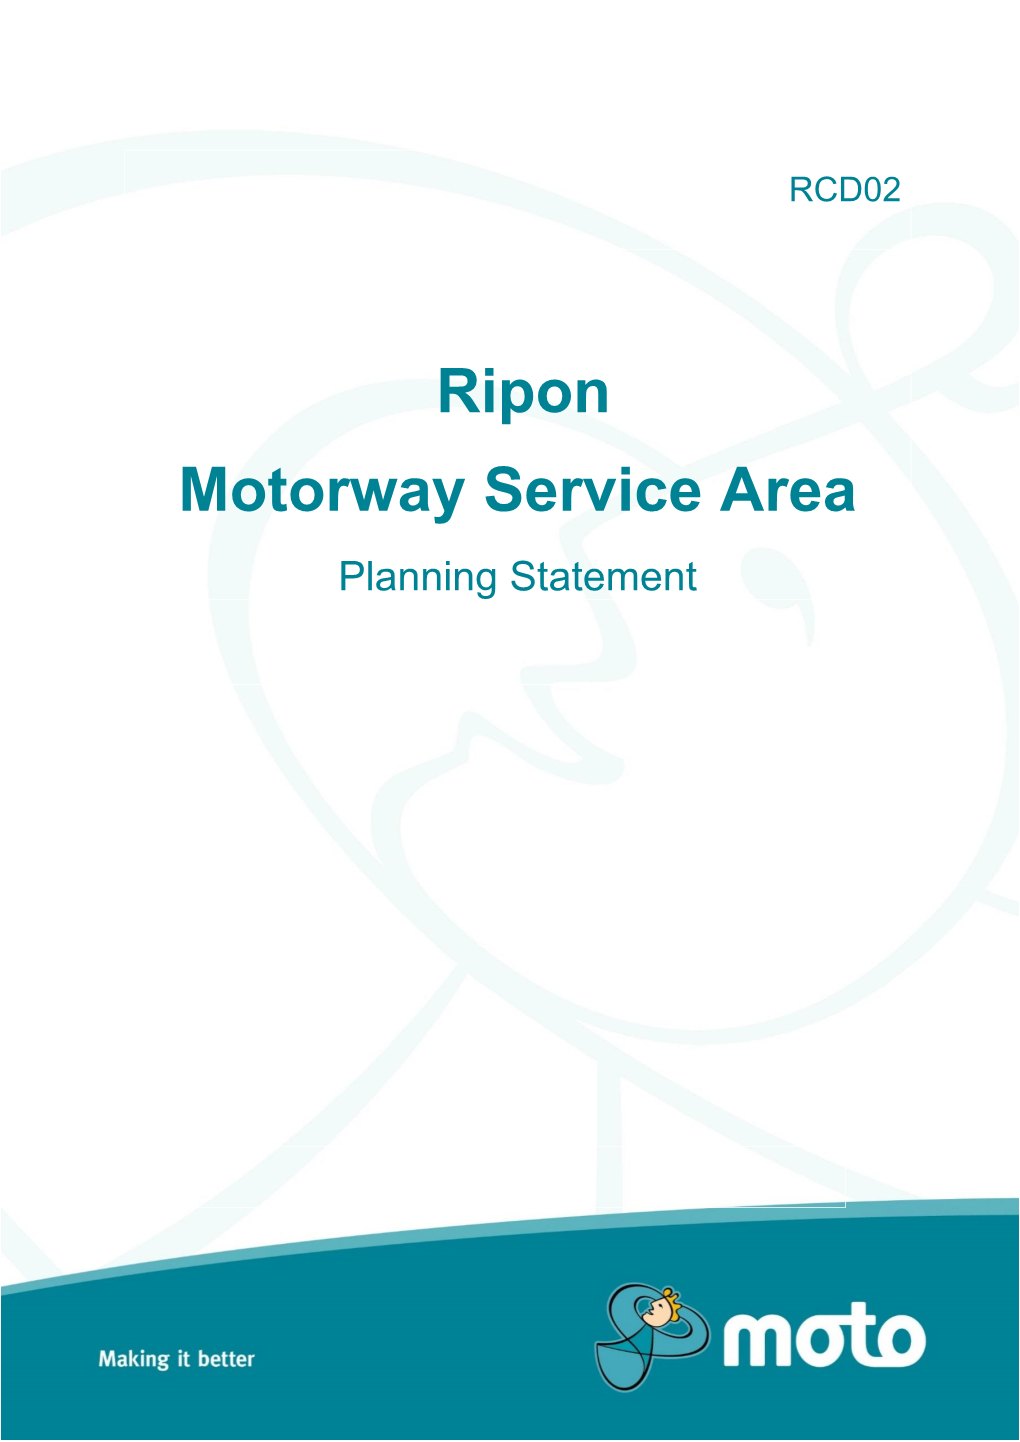 Ripon Motorway Service Area Planning Statement